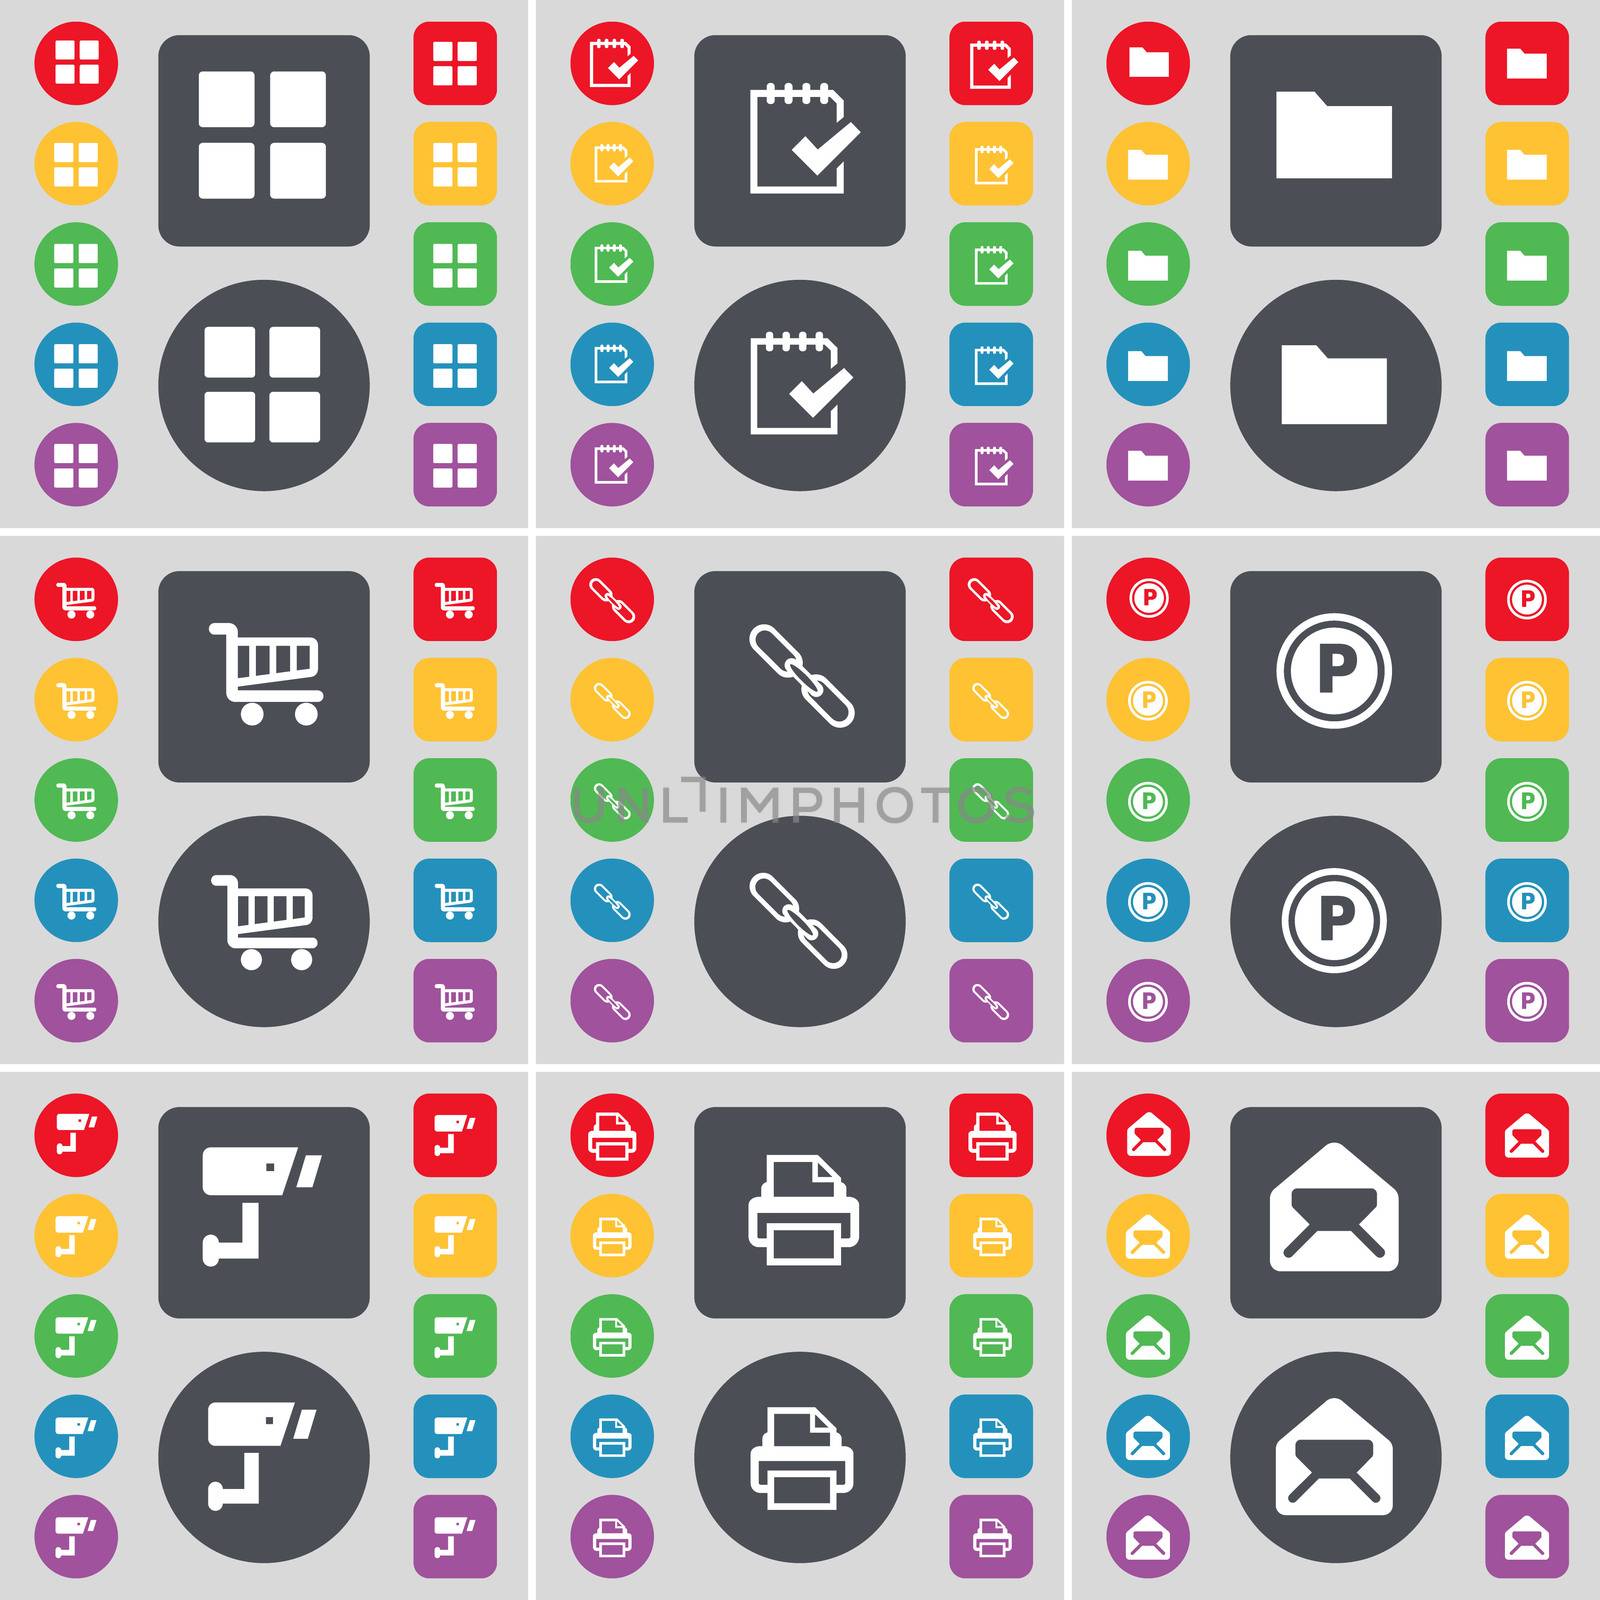 Apps, Survey, Folder, Shopping cart, Link, Parking, CCTV, Printer, Message icon symbol. A large set of flat, colored buttons for your design. illustration